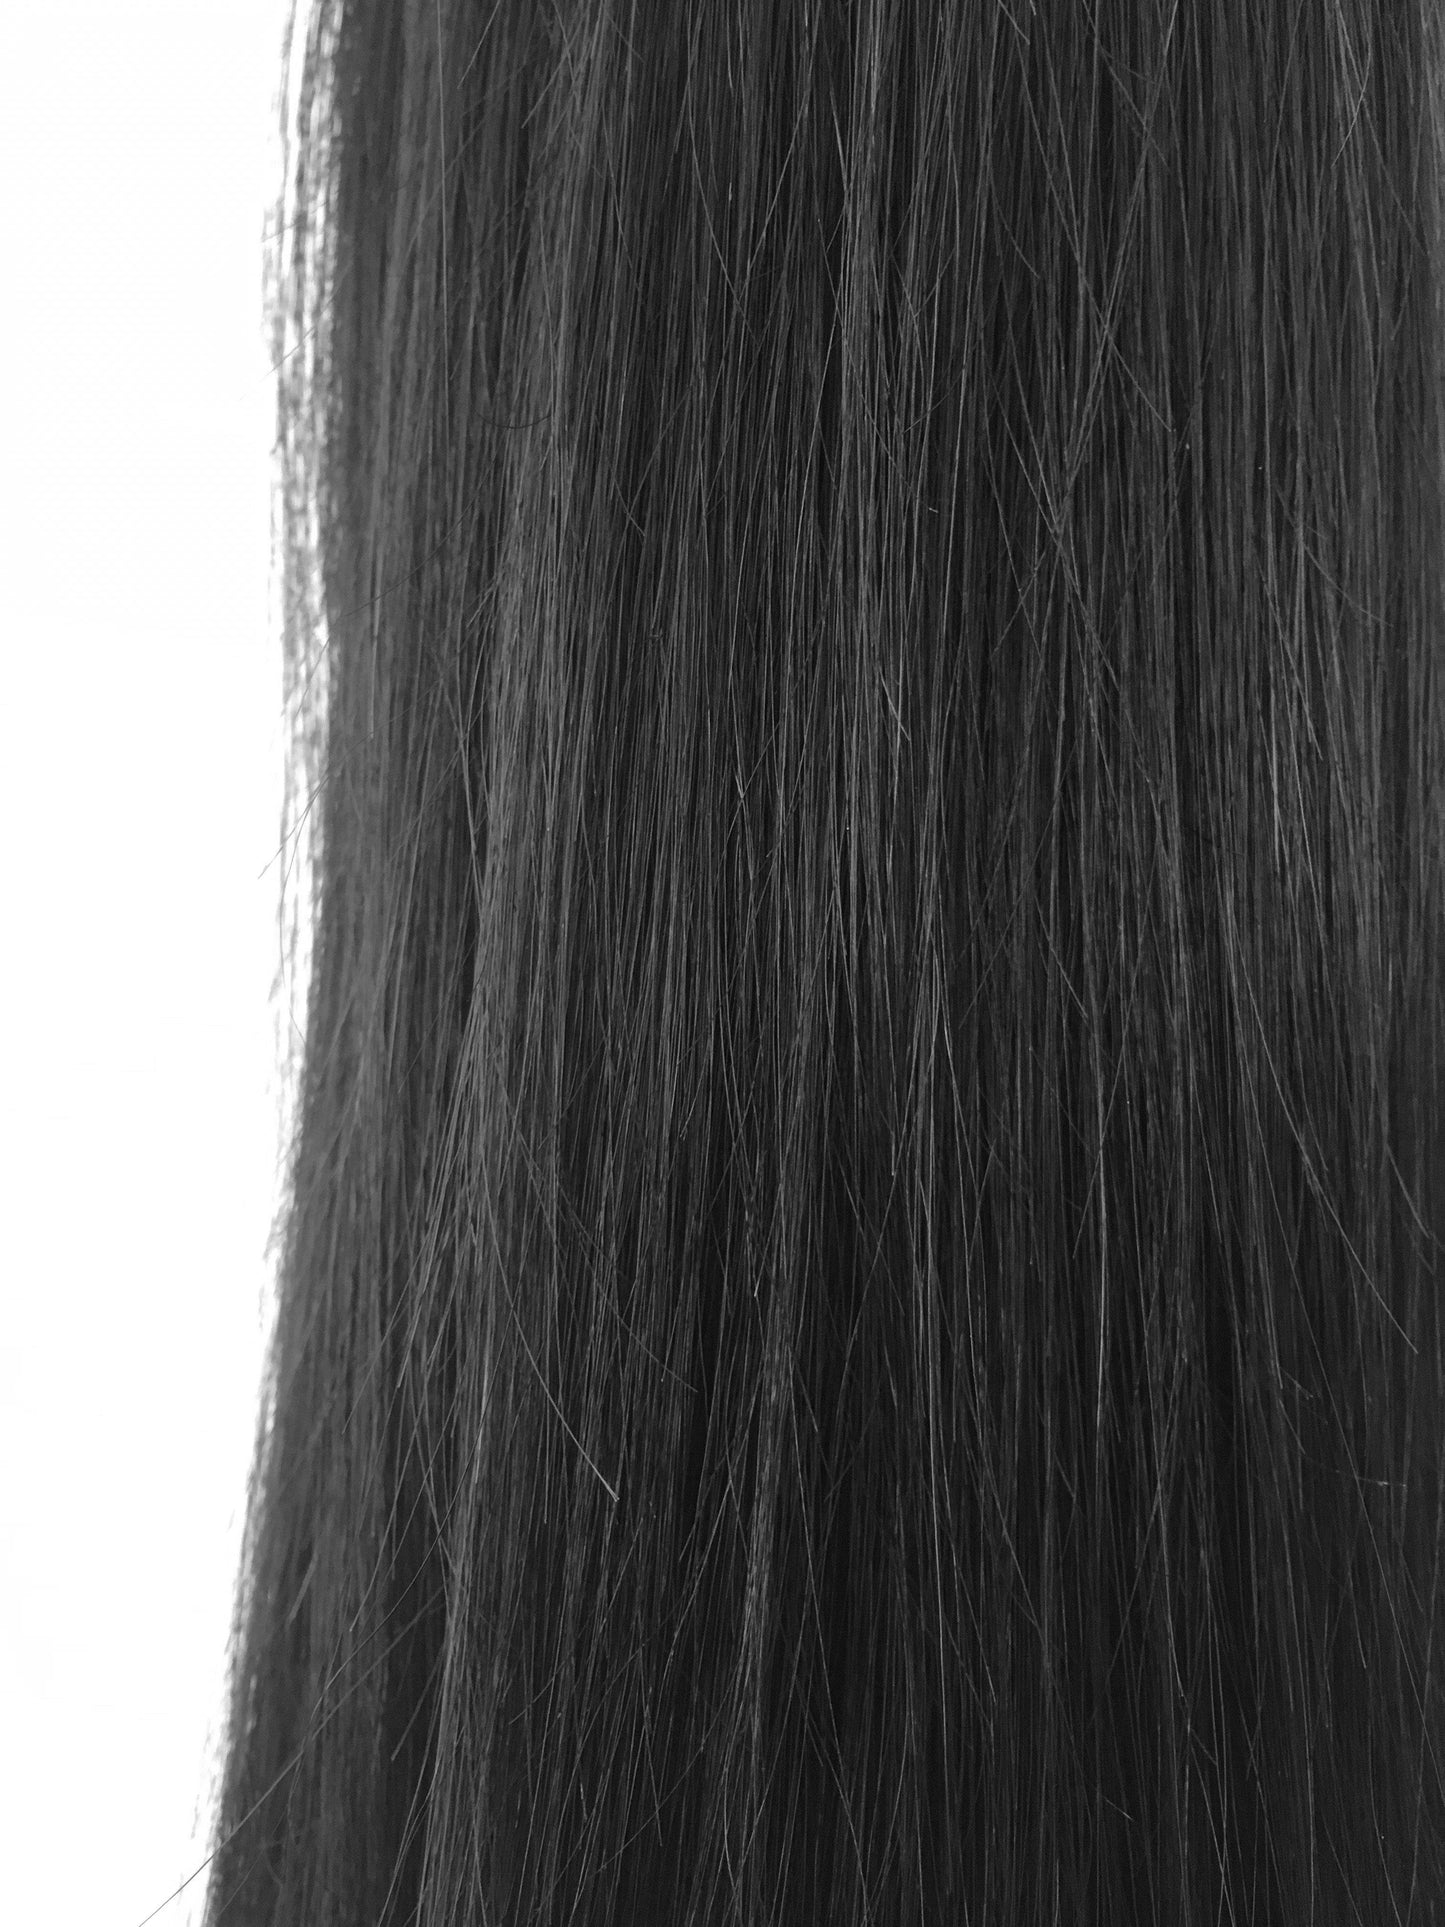 Brazilian Virgin Remy Human Hair, Nano Ring Extensions, Straight, 24'', Virgin Uncoloured. Quick Shipping!-Virgin Hair & Beauty, The Best Hair Extensions, Real Virgin Human Hair.